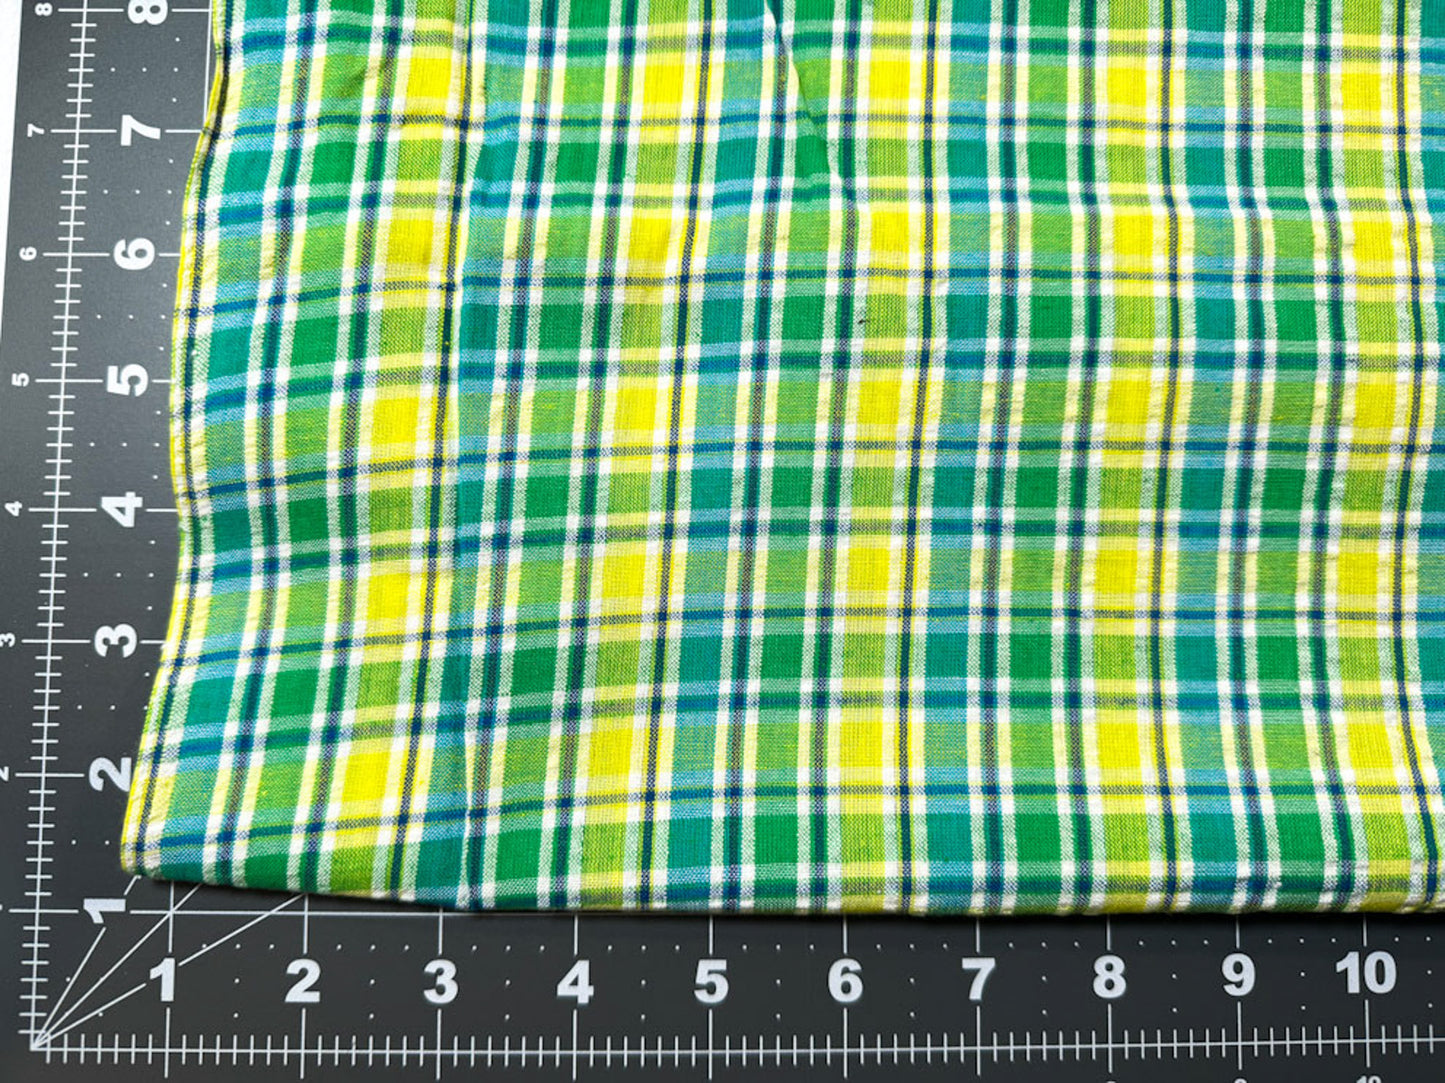 SeerSucker Blue Yellow Green plaid fabric